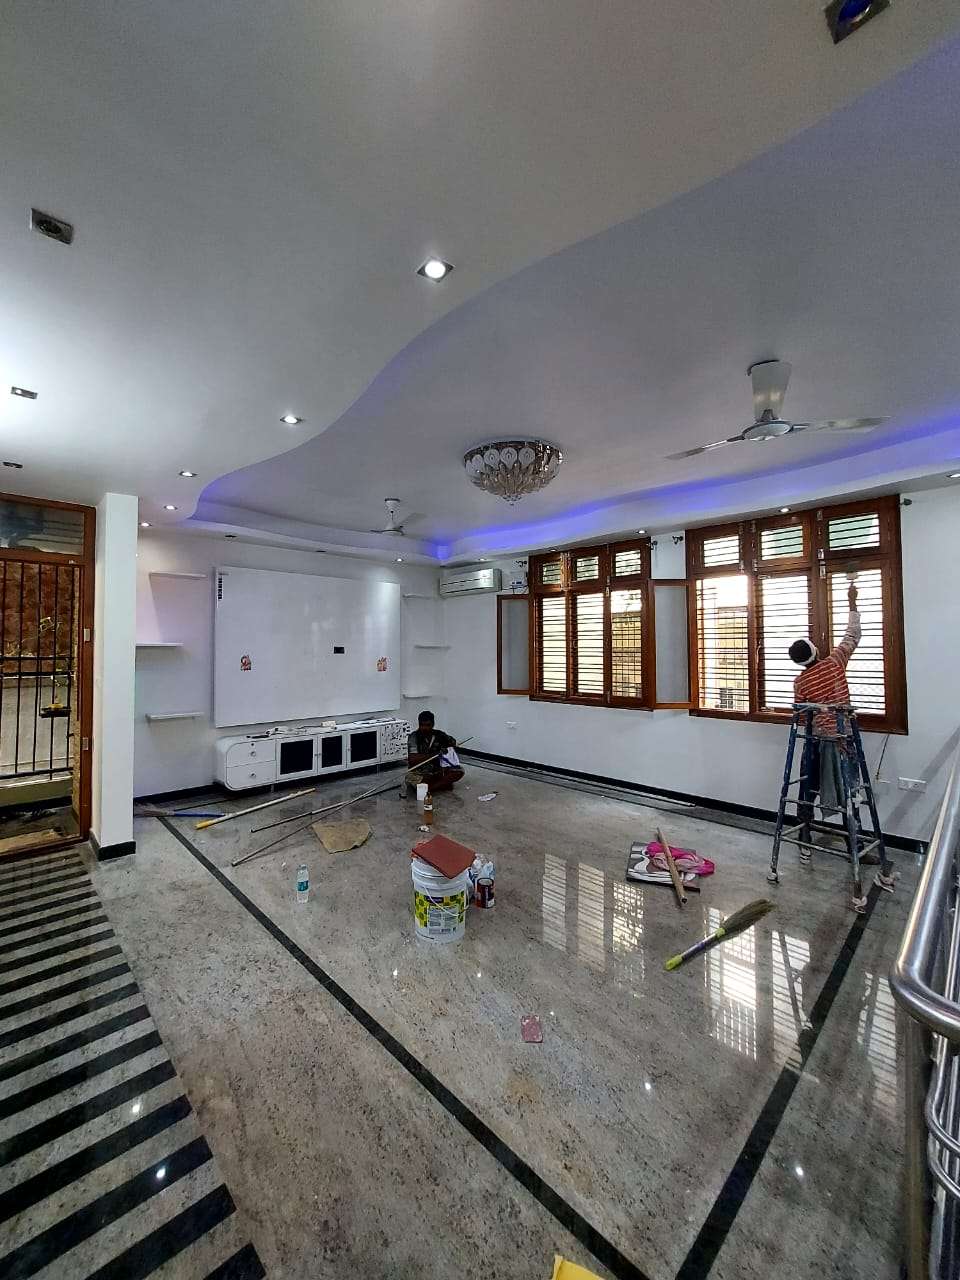 3 BHK Villa For Rent in Royal Habitat Hsr Layout Bangalore 6654955